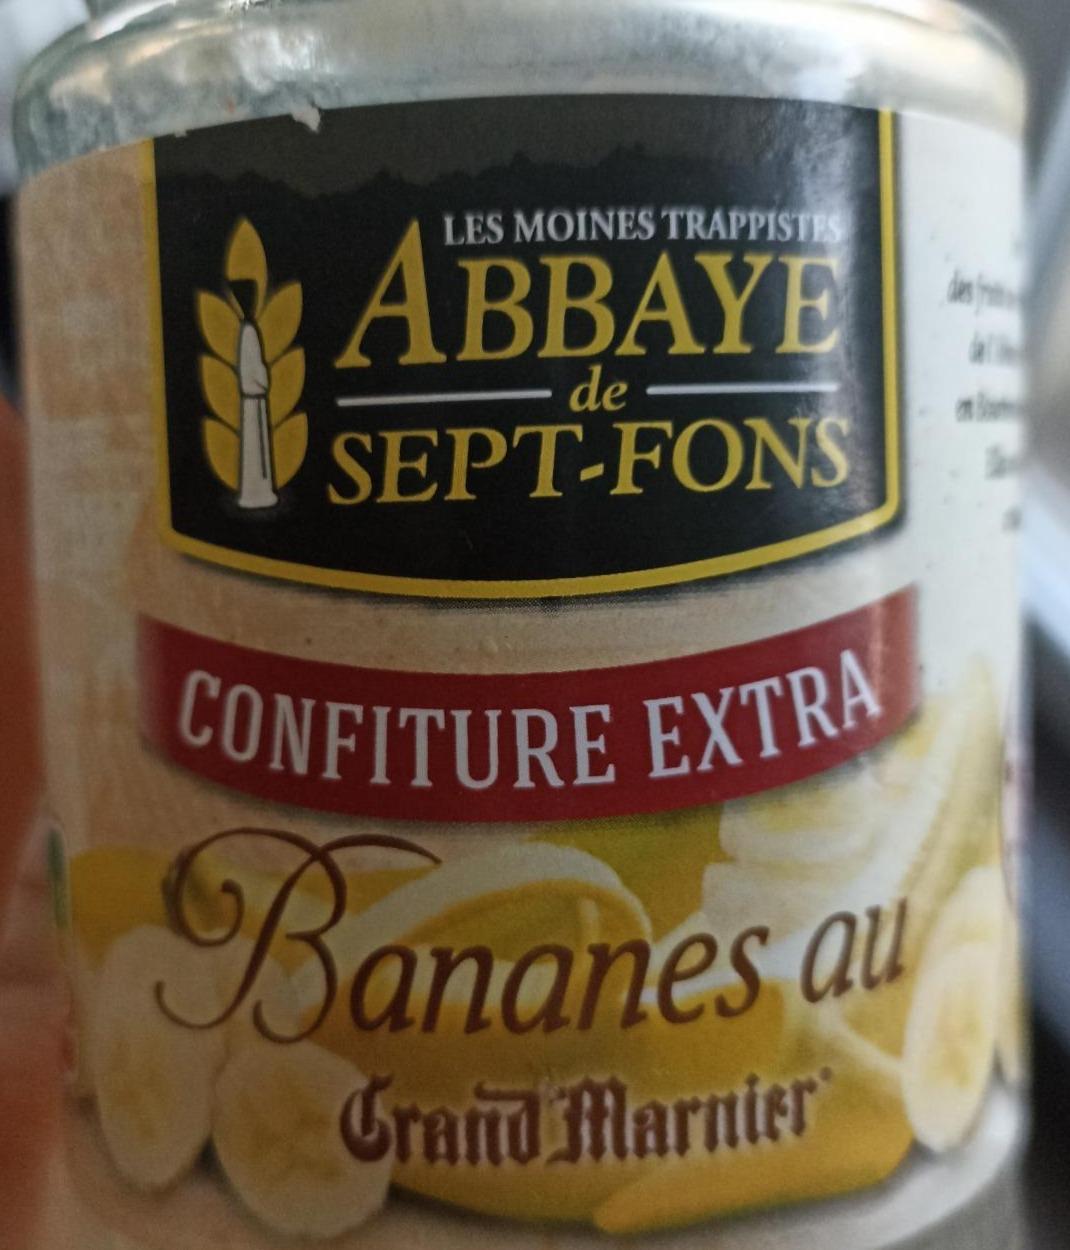 Fotografie - Confiture Extra Bananes au Grand Marnier Abbaye Sept-Fons